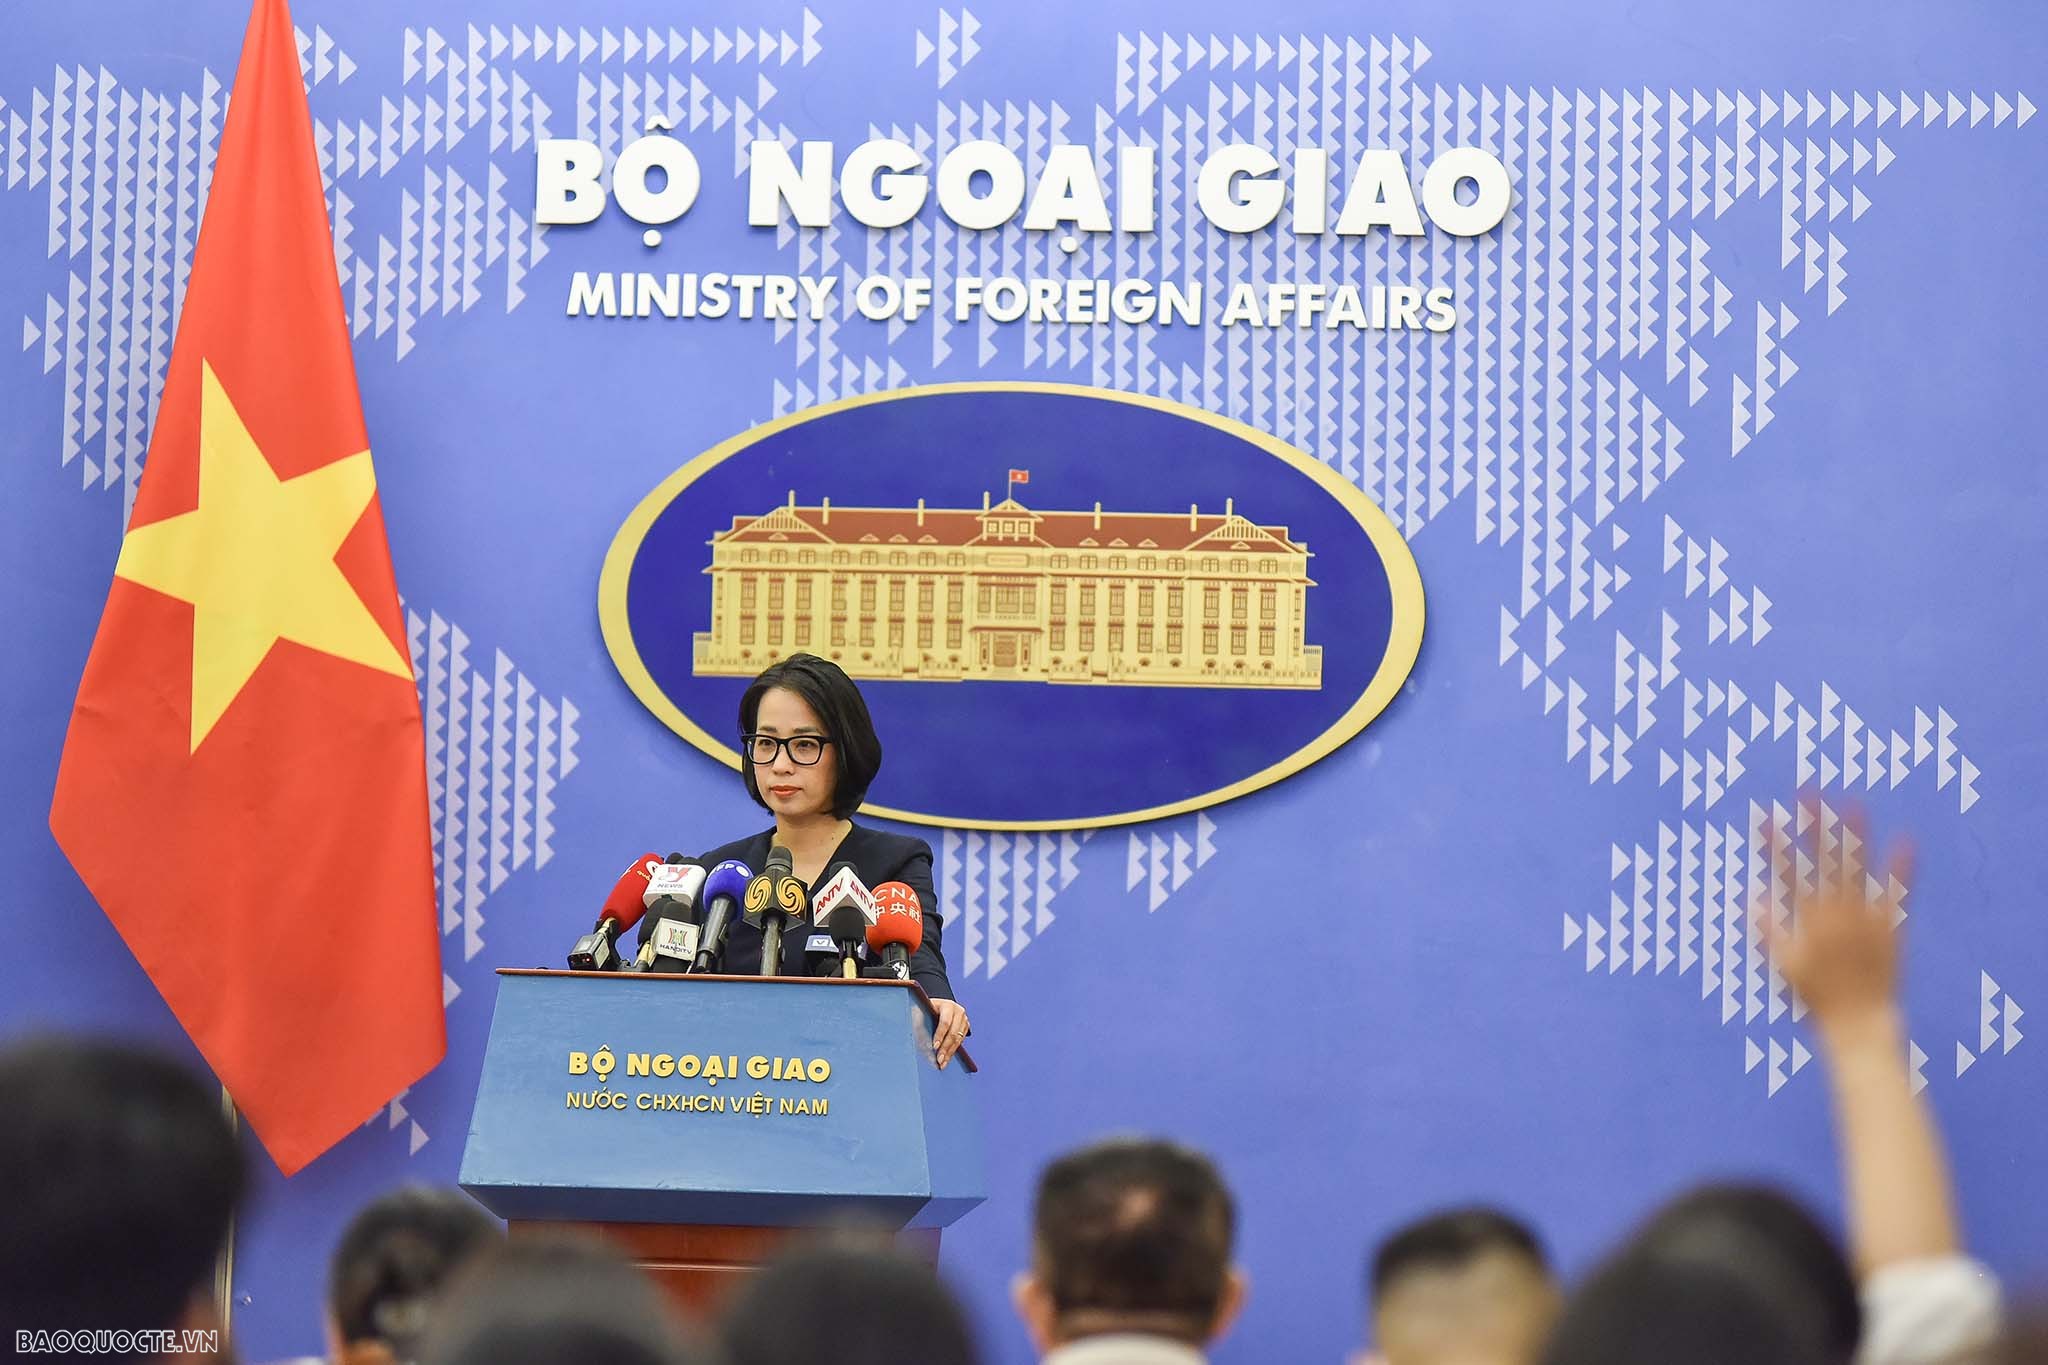 Vietnam strongly condemns violent attacks on civilians: spokesperson